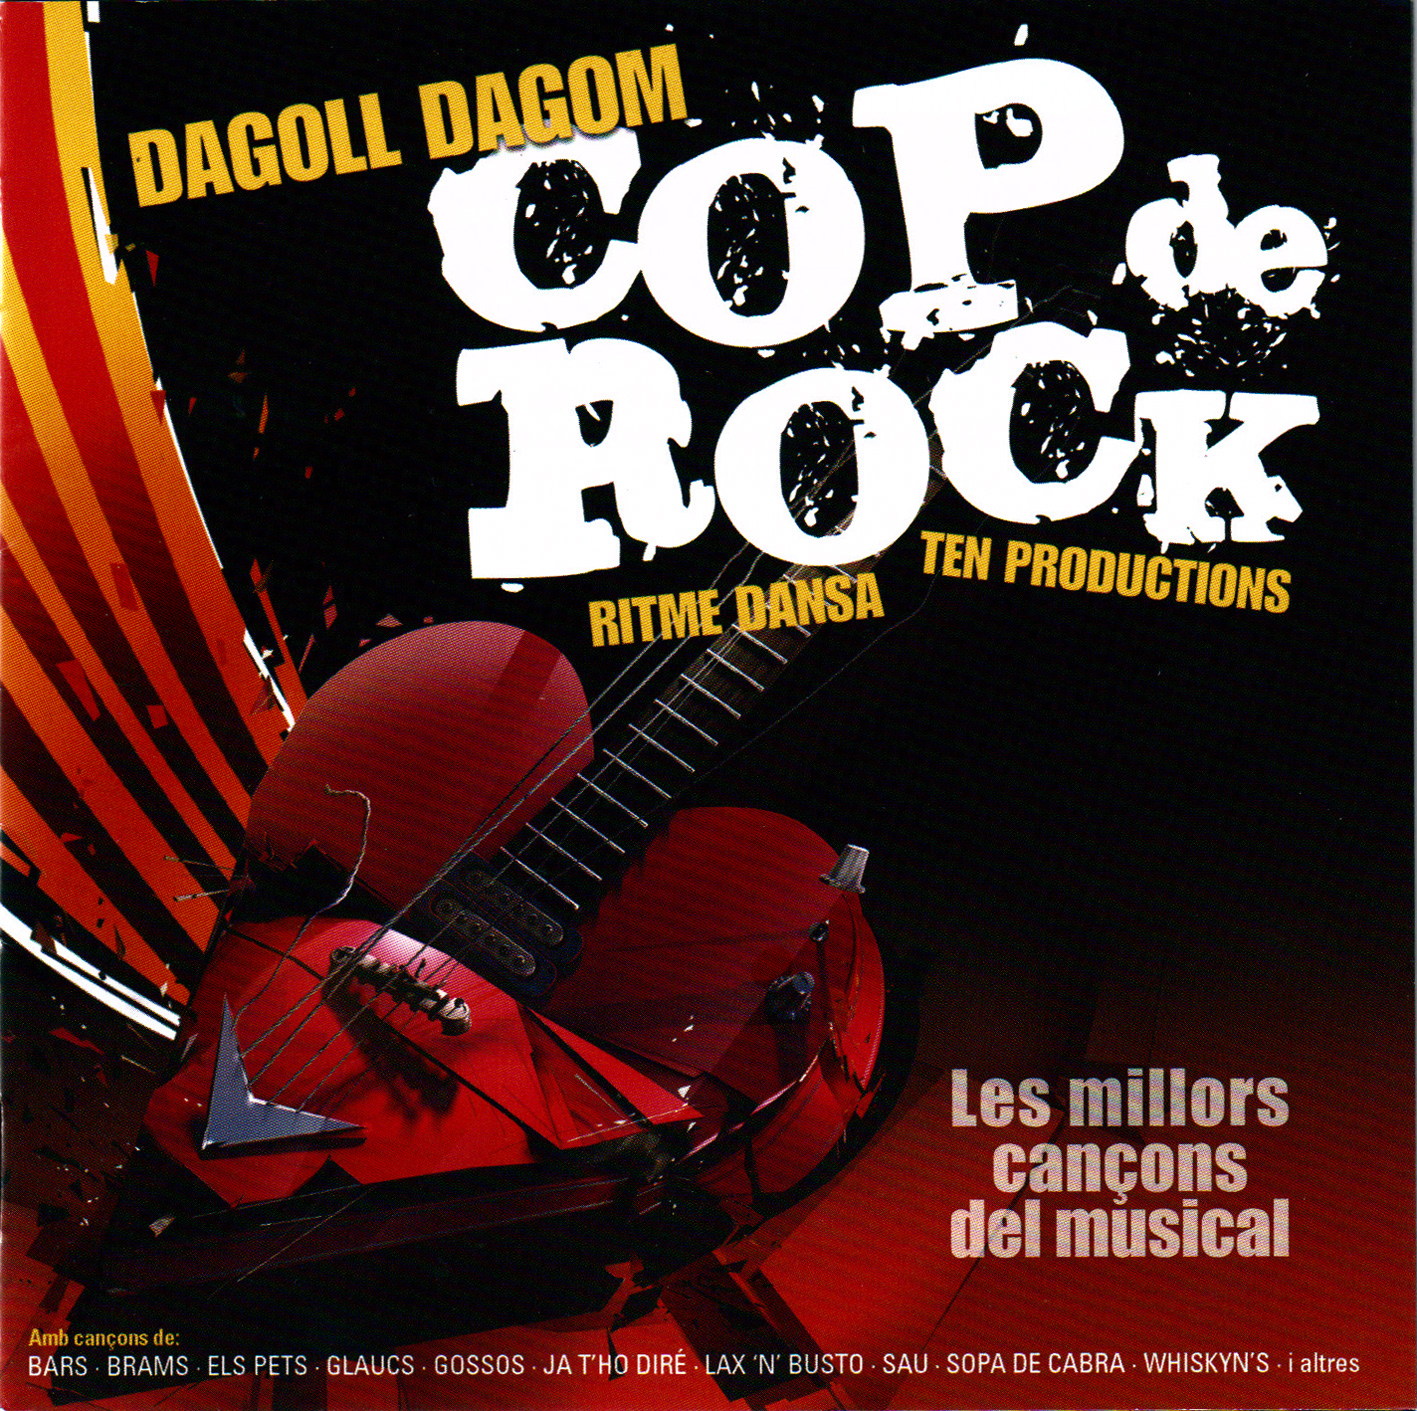 dagoll-dagom-cop-de-rock